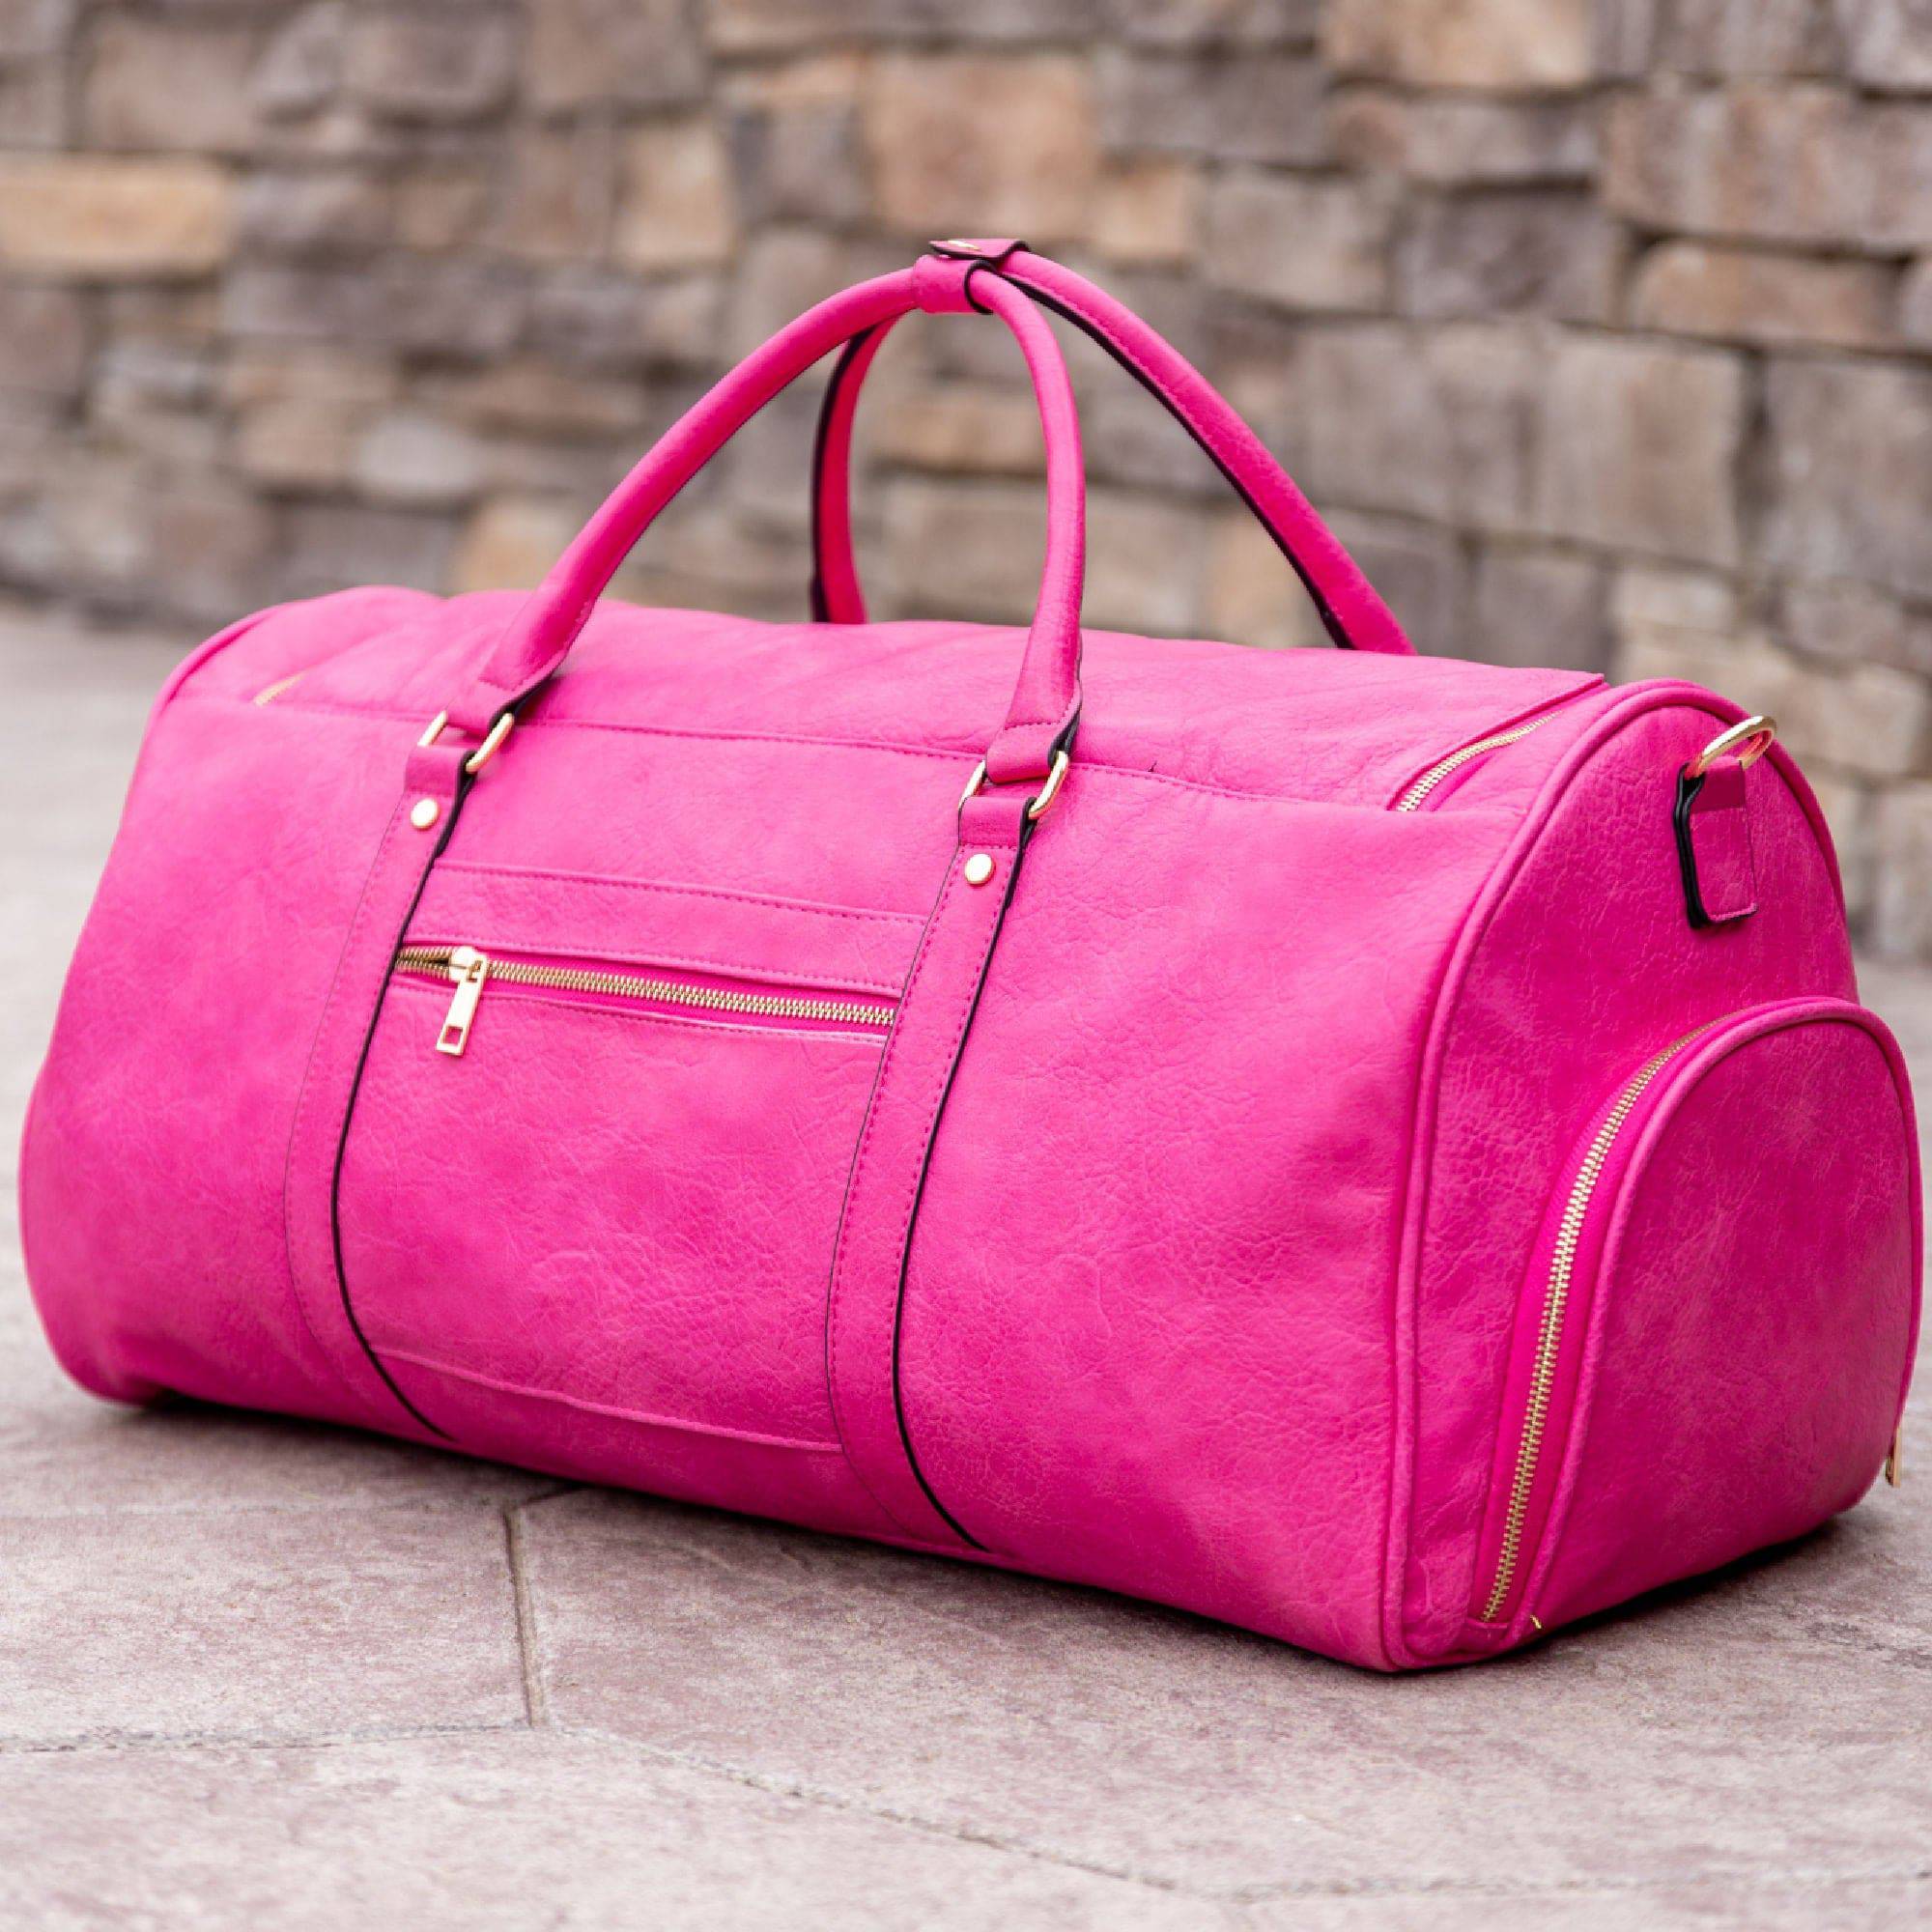 Can't Guard Me Basketball Duffel Bag - Female Pink – Tate's Box